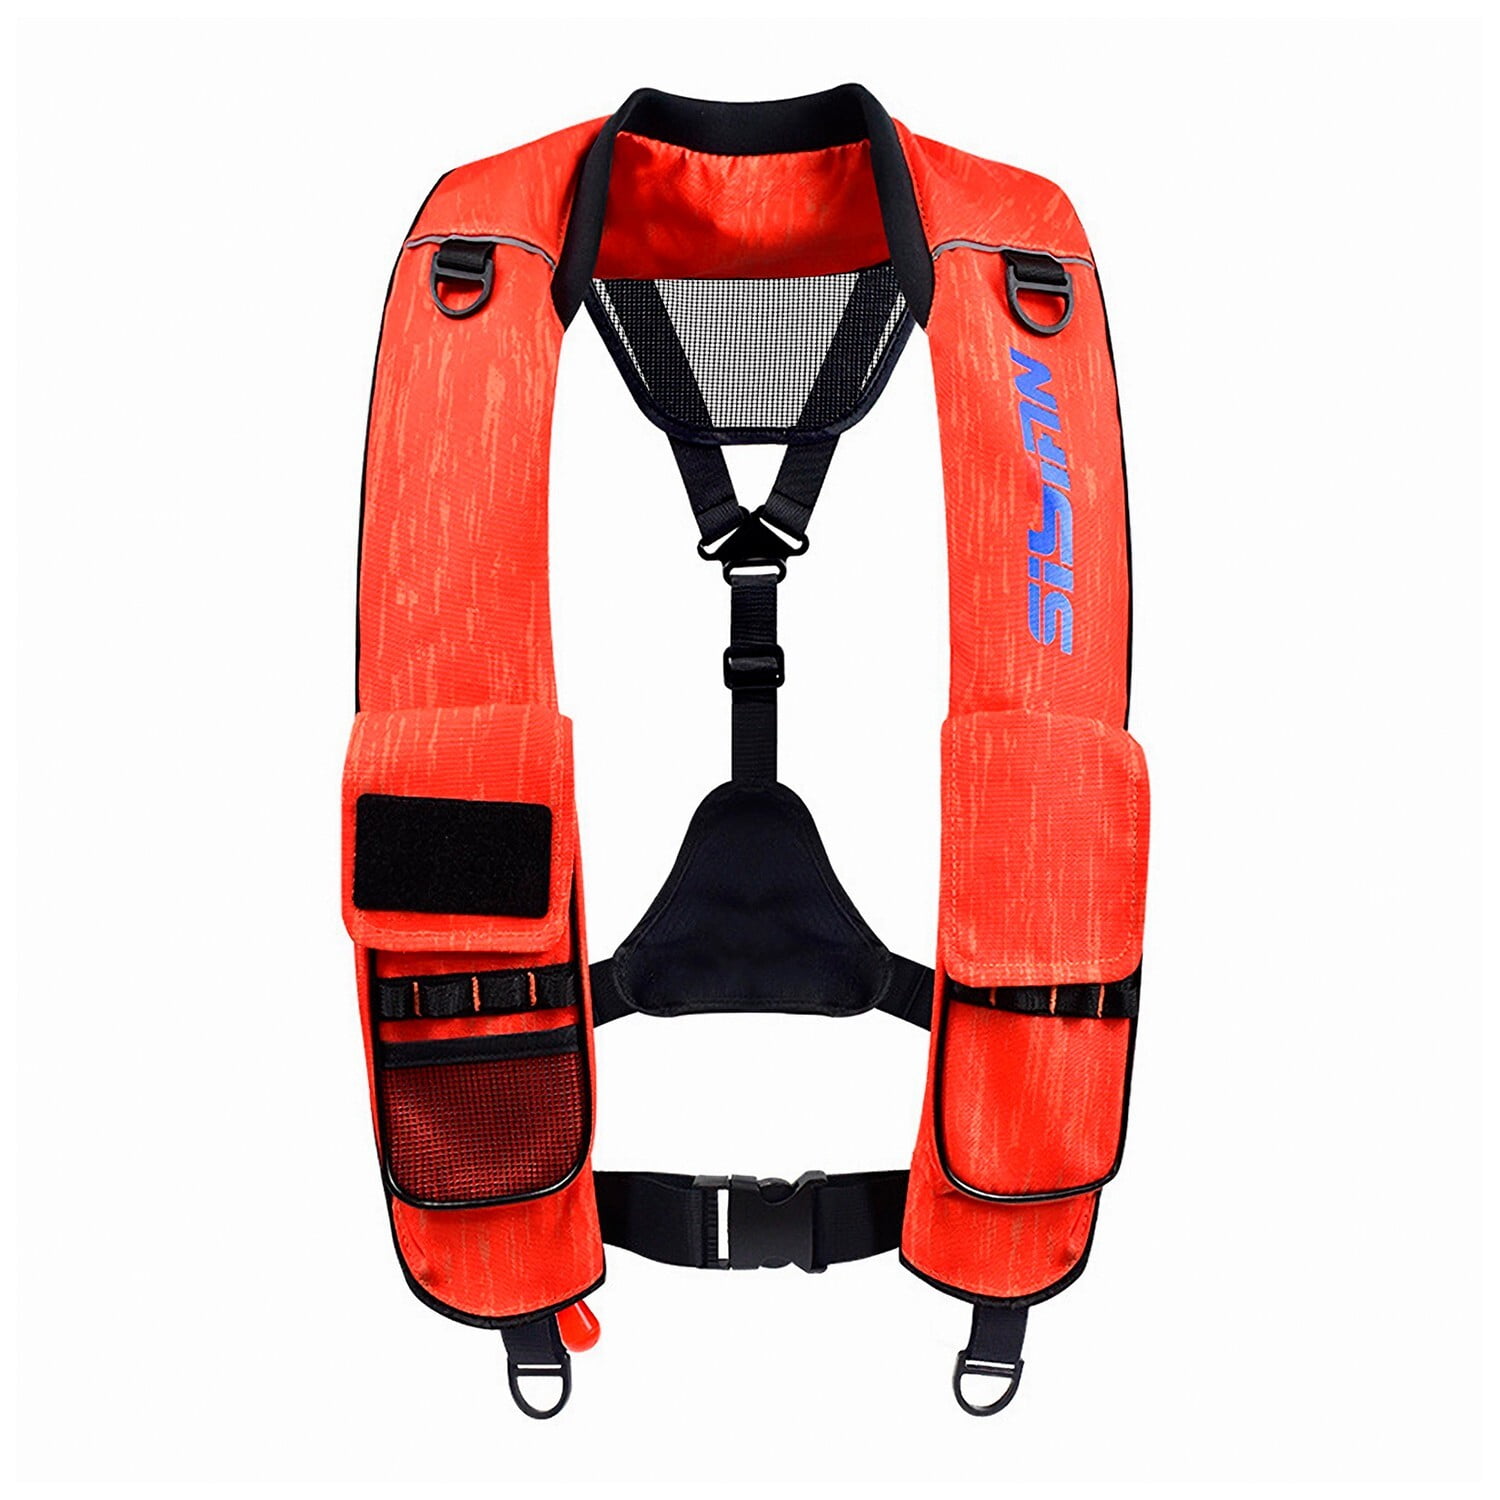 MMYsport Adults Safety Life Vest Lightweight Floating Jacket for